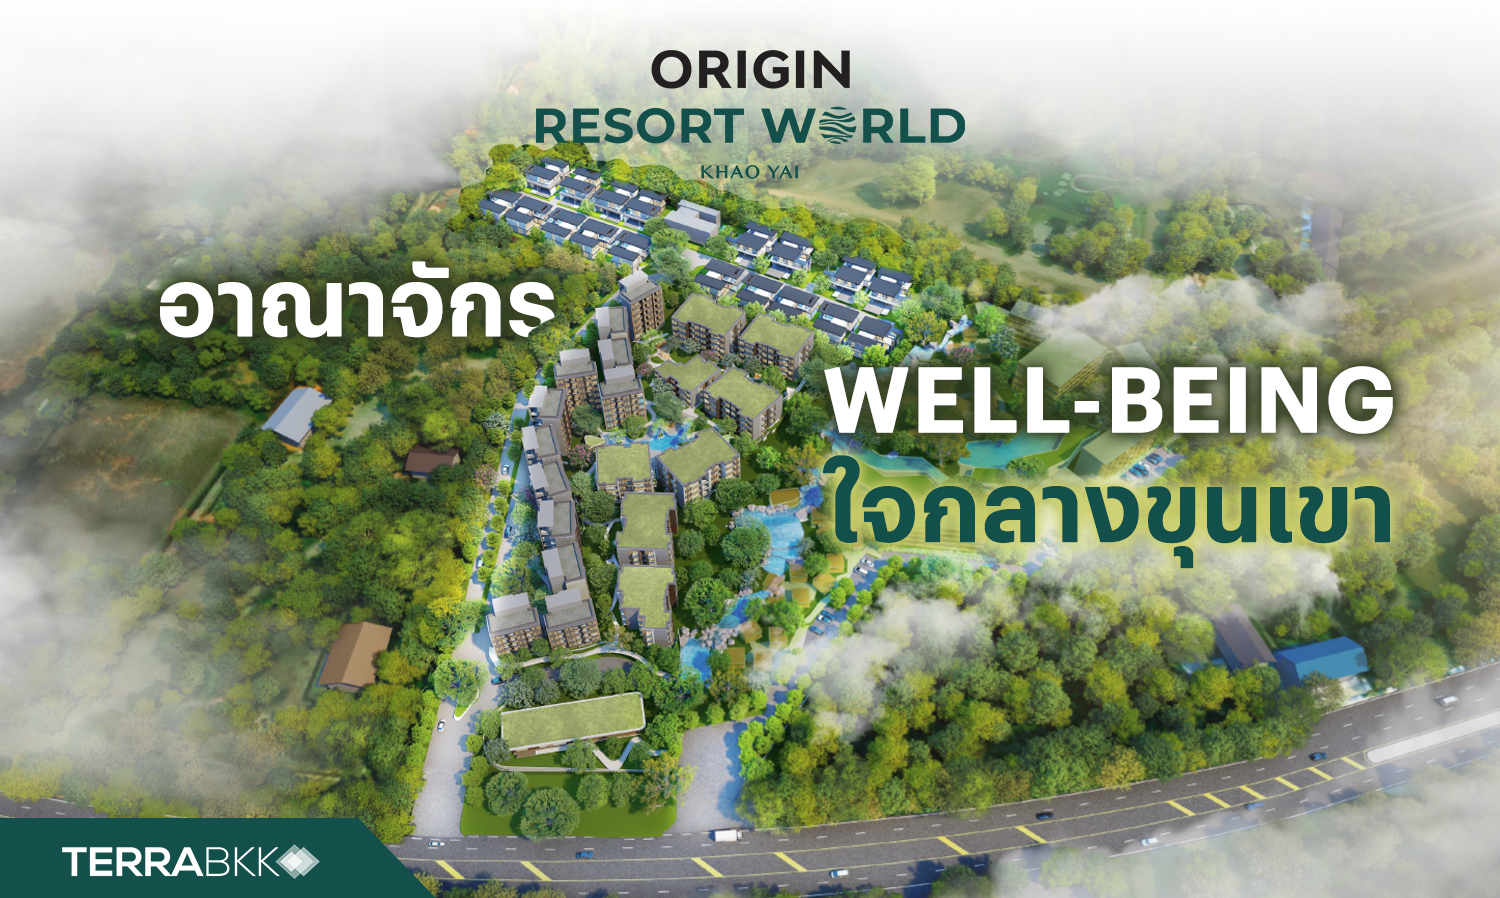 Origin Resort World Khaoyai อาณาจักร WELL-BEING ใจกลางขุนเขา